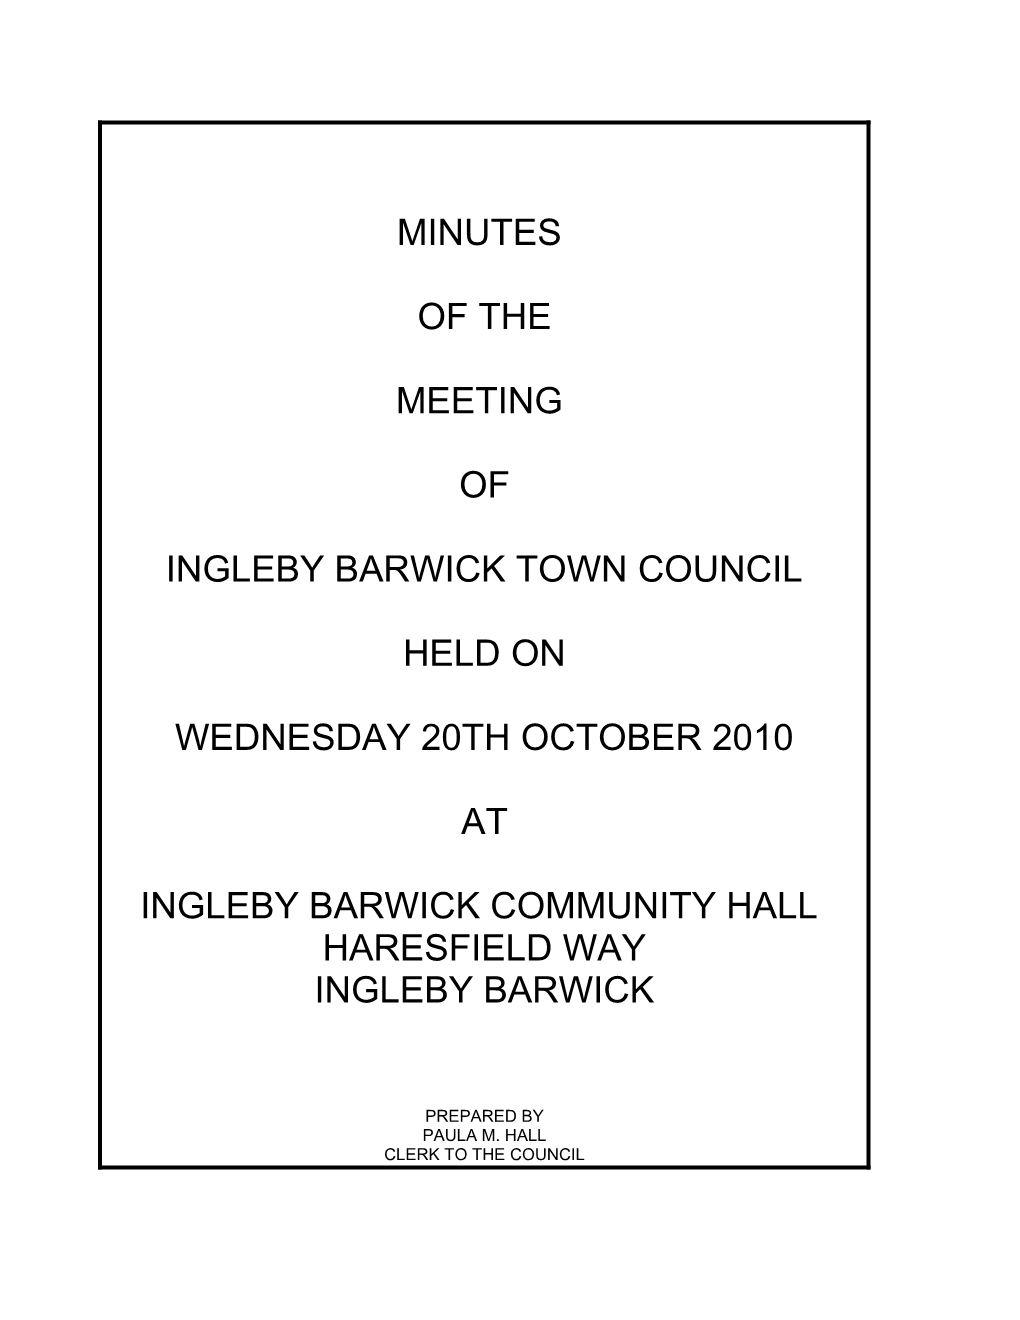 Ingleby Barwick Town Council